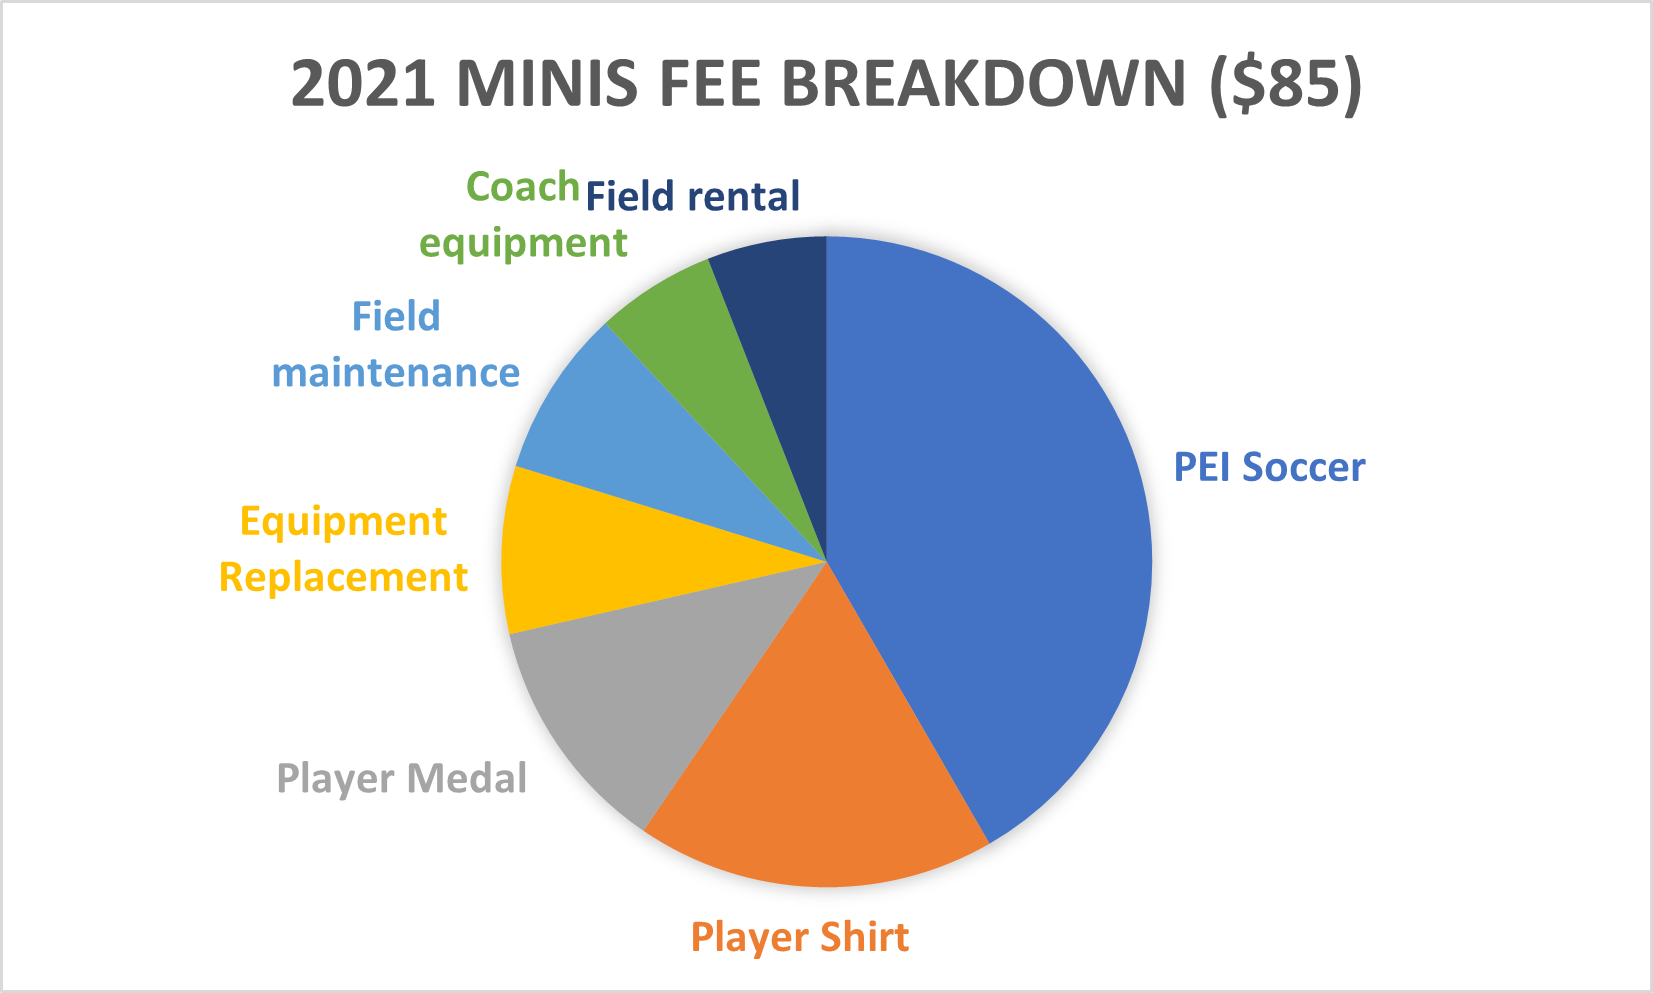 2021 Minis Fee Breakdown